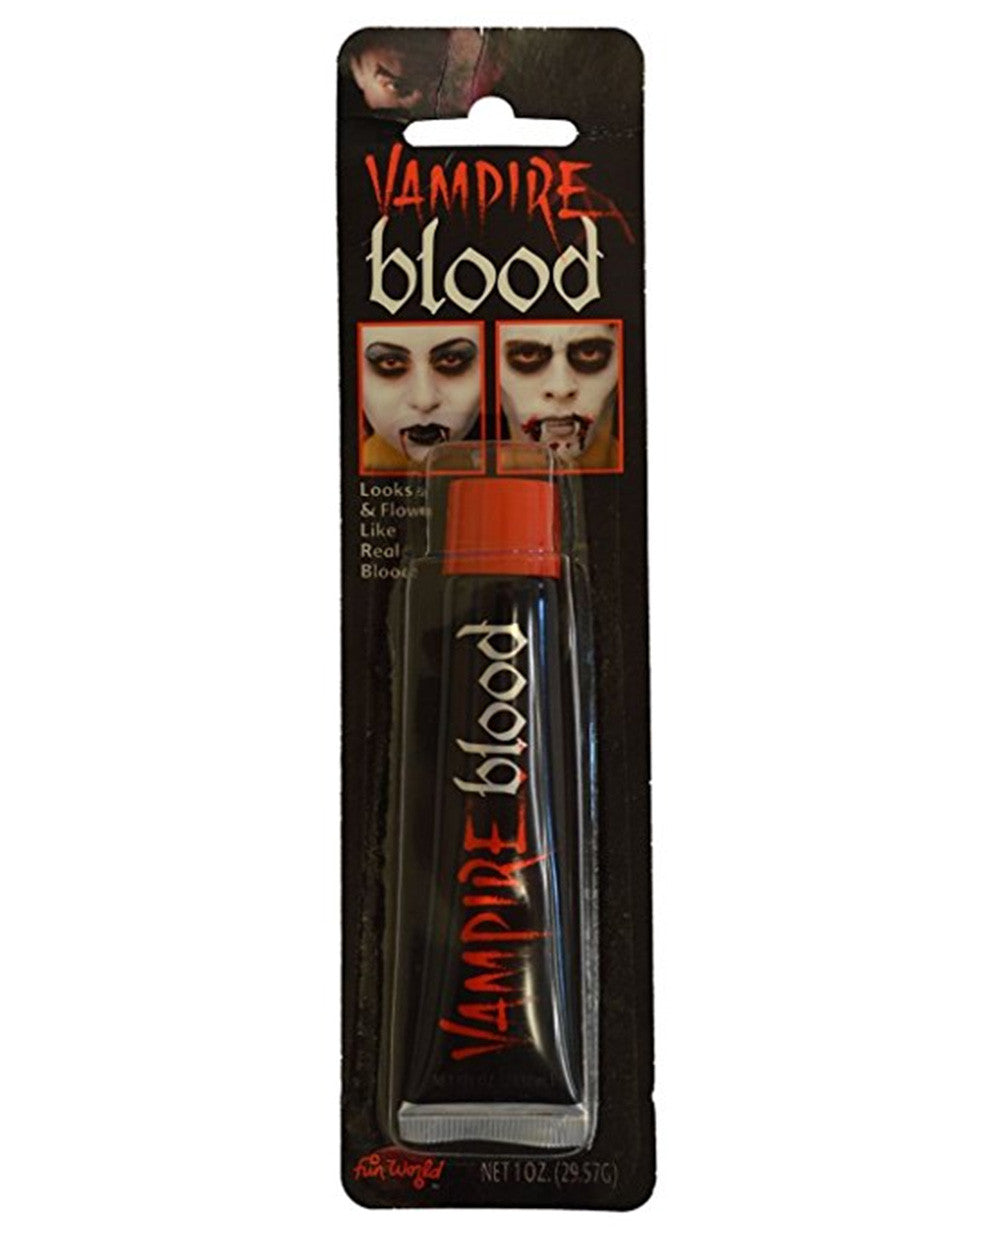 VAMPIRE (THEATRICAL) BLOOD.